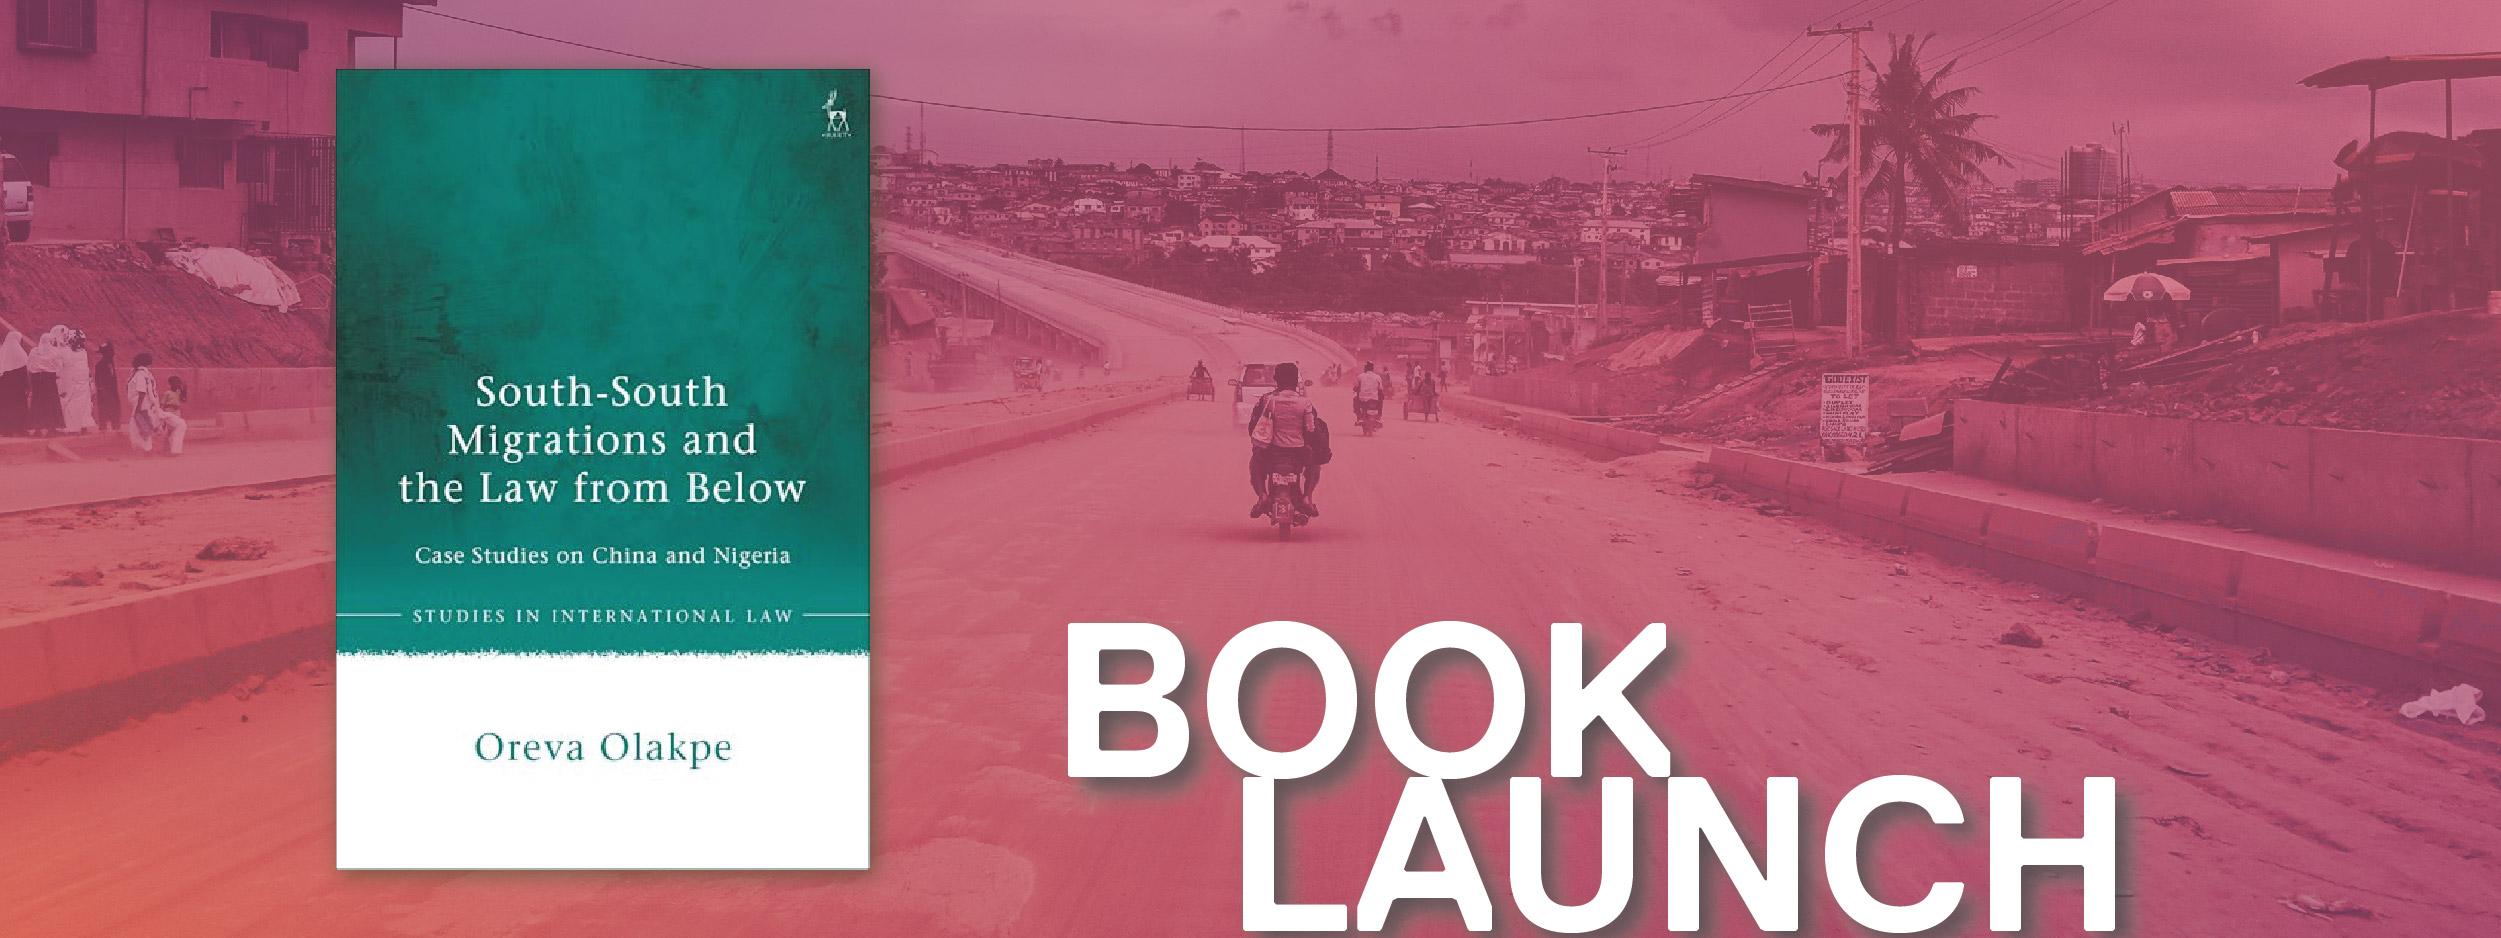 Book Launch banner - Oreva Olakpe